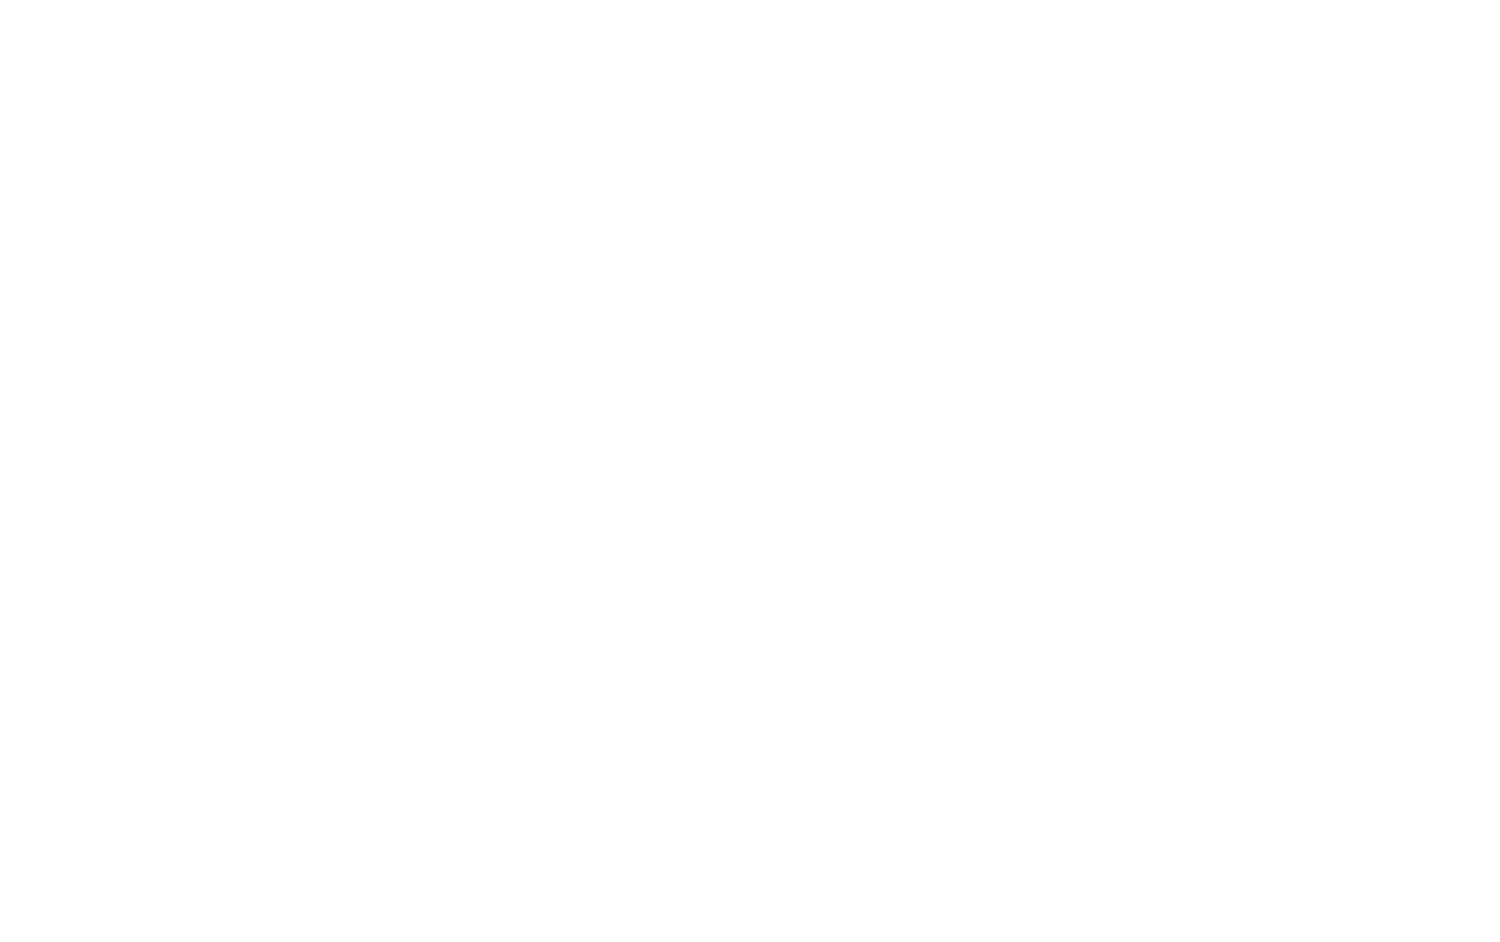 JASON PARKER